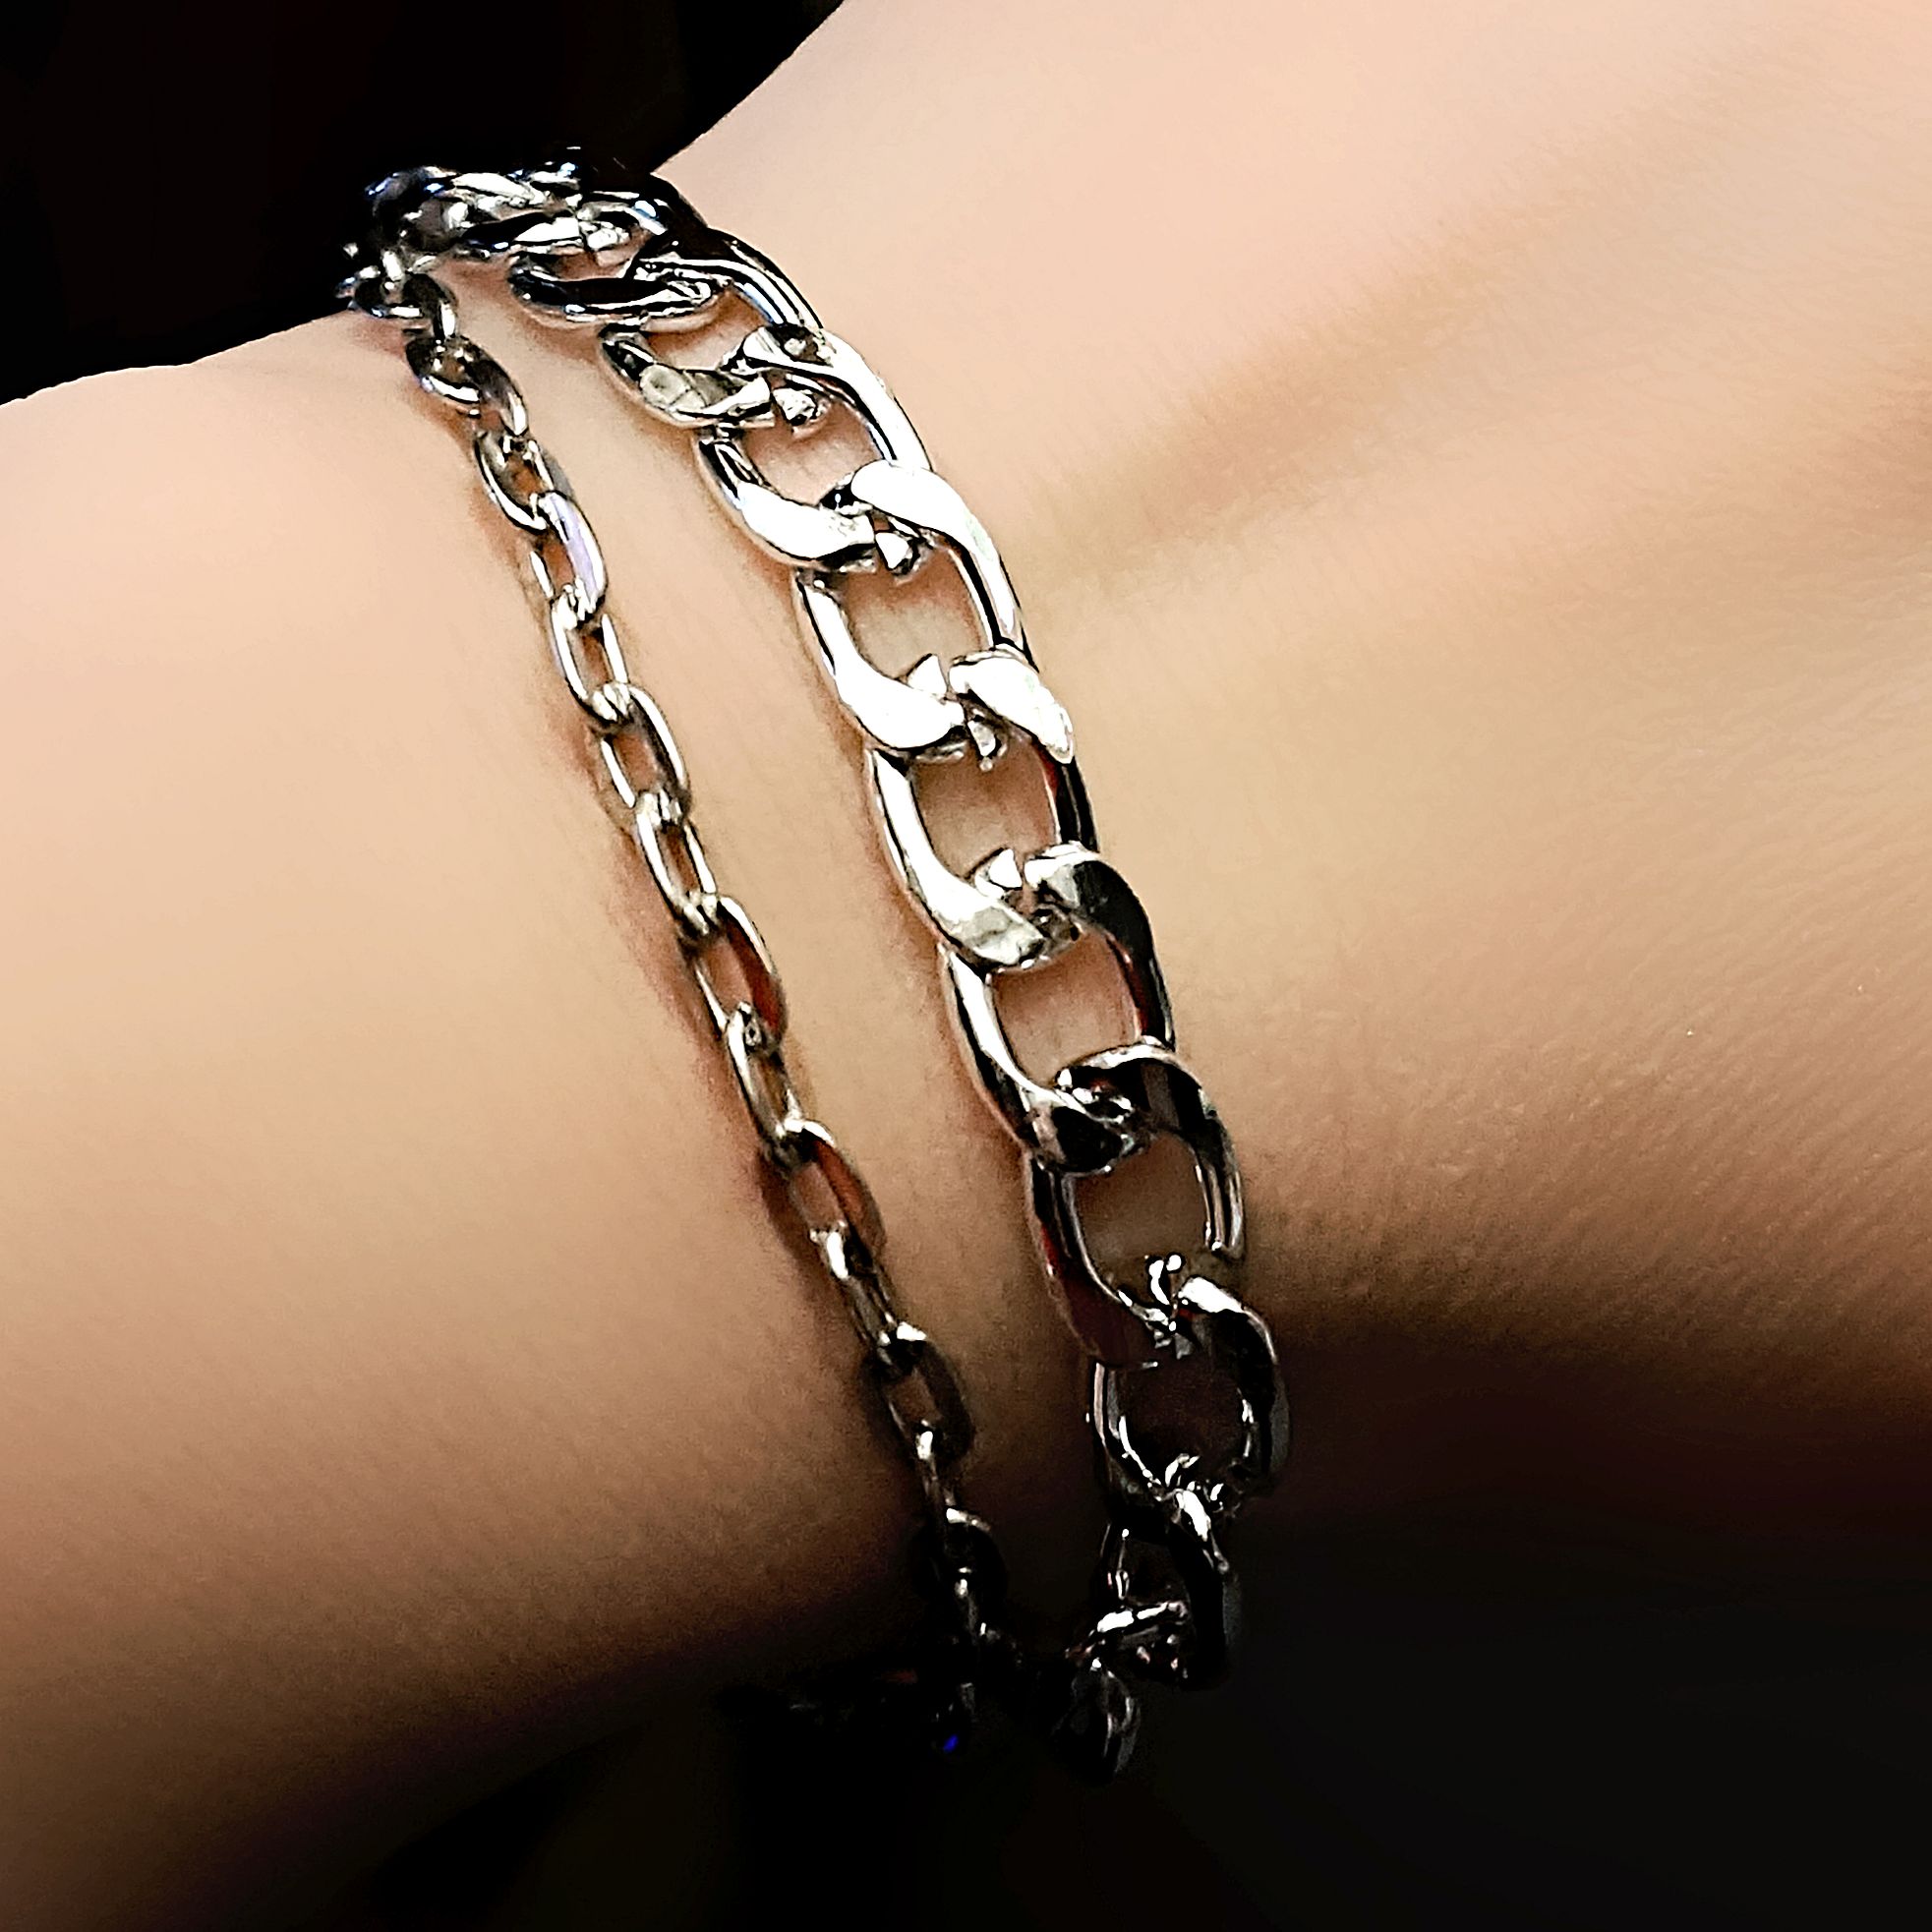 Steampunk BDSM jewelry chain bracelet submissive dominant mistress.